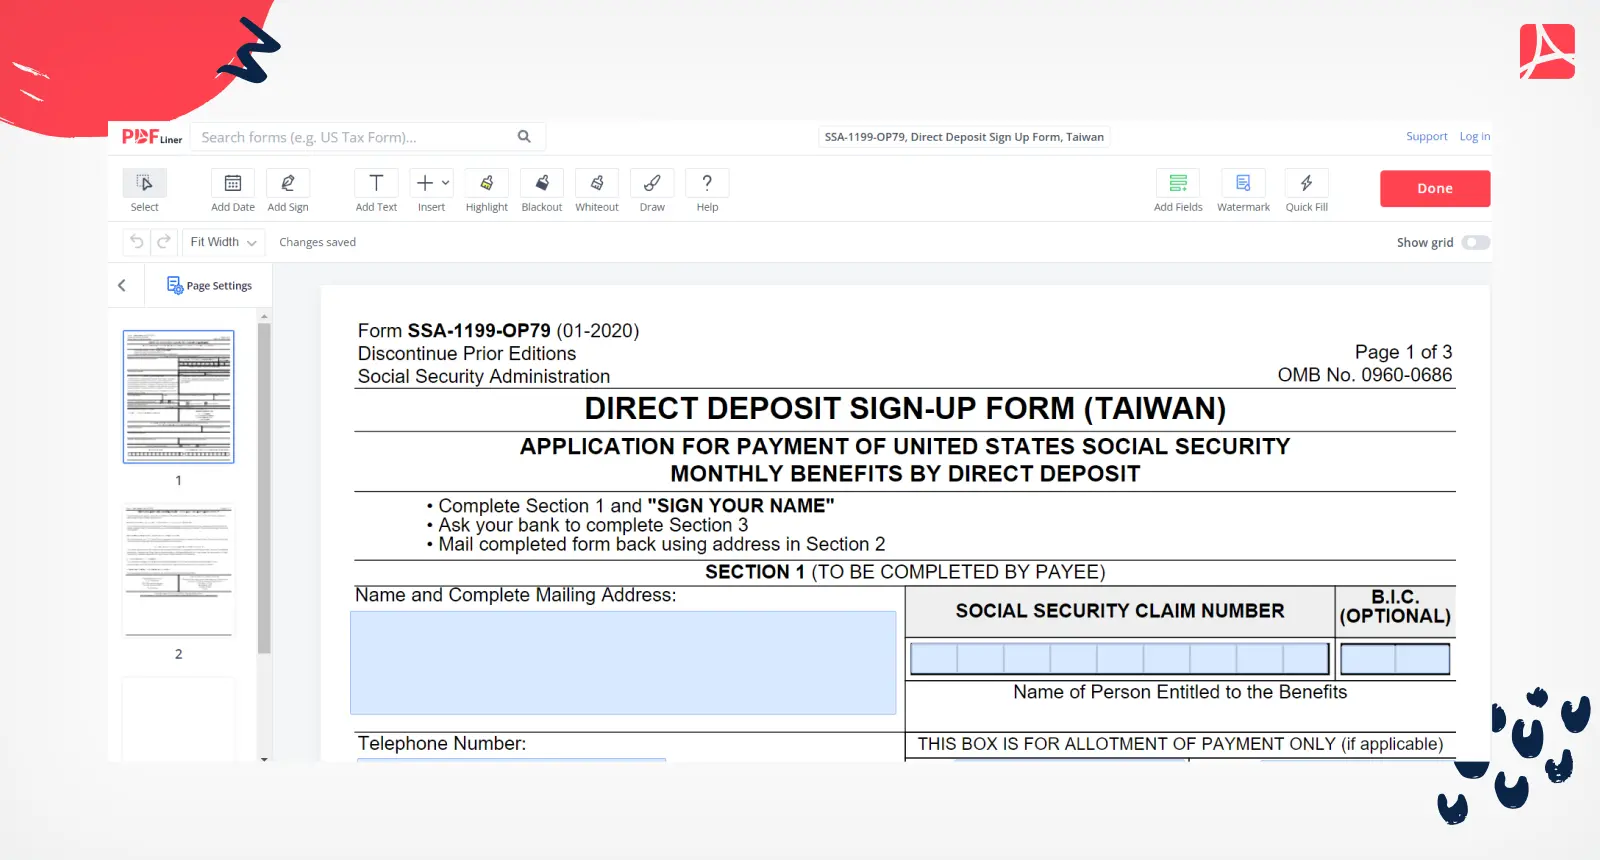 SSA-1199-OP79, Direct Deposit Sign Up Form, Taiwan on PDFLiner